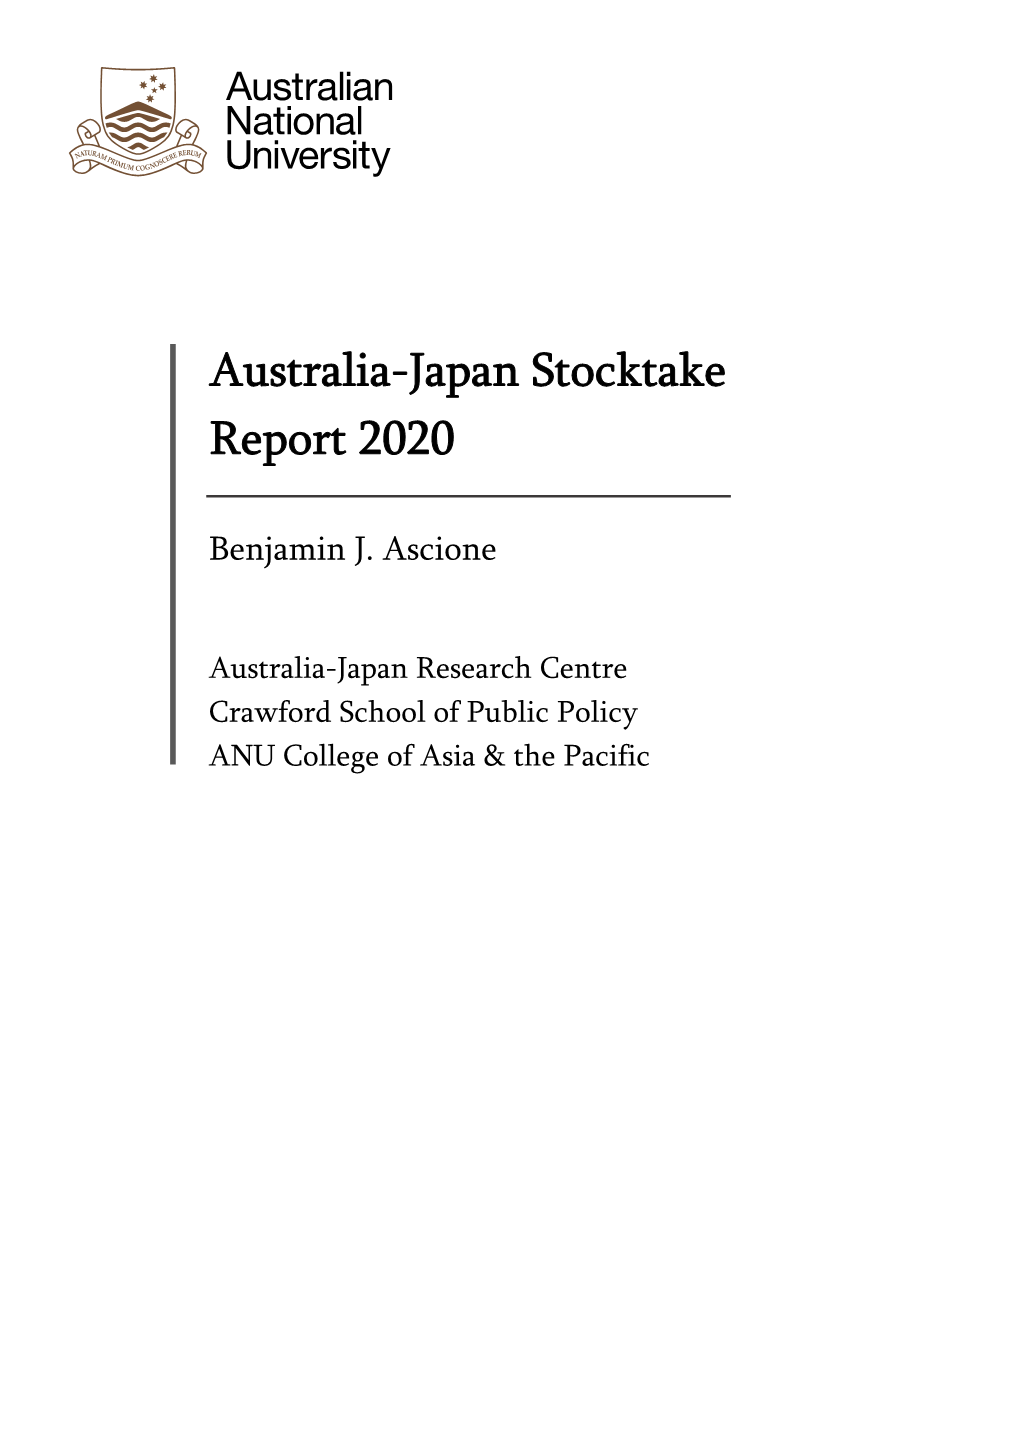 Australia-Japan Stocktake Report 2020